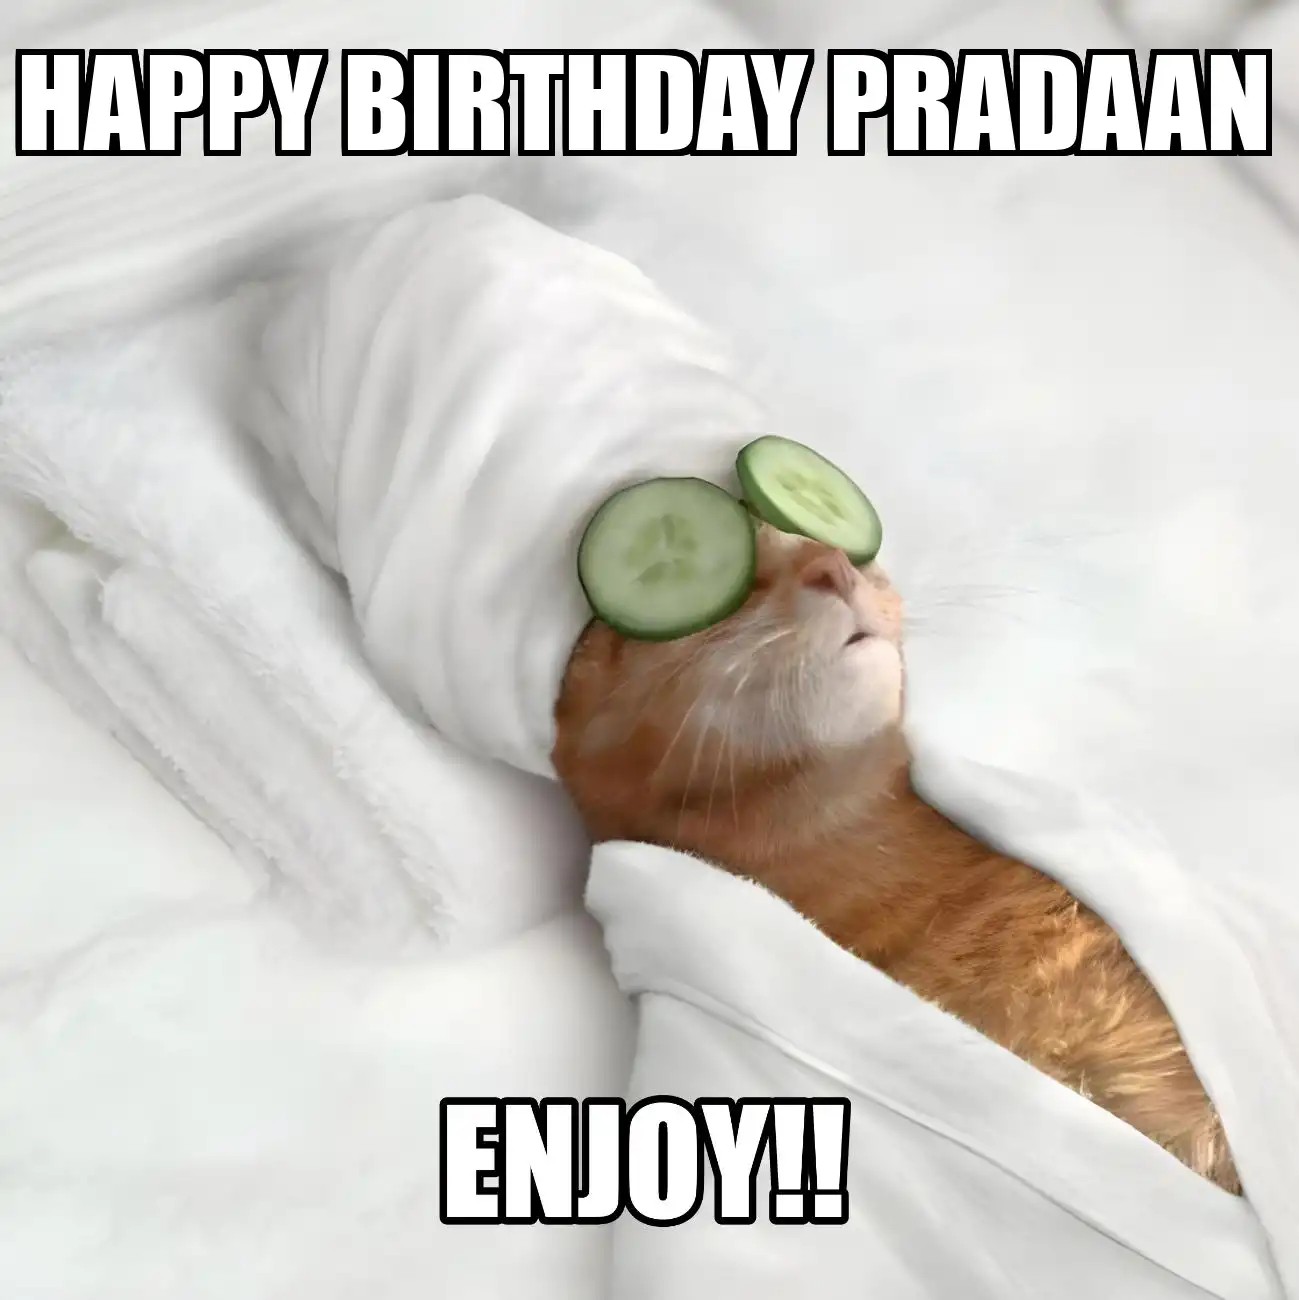 Happy Birthday Pradaan Enjoy Cat Meme